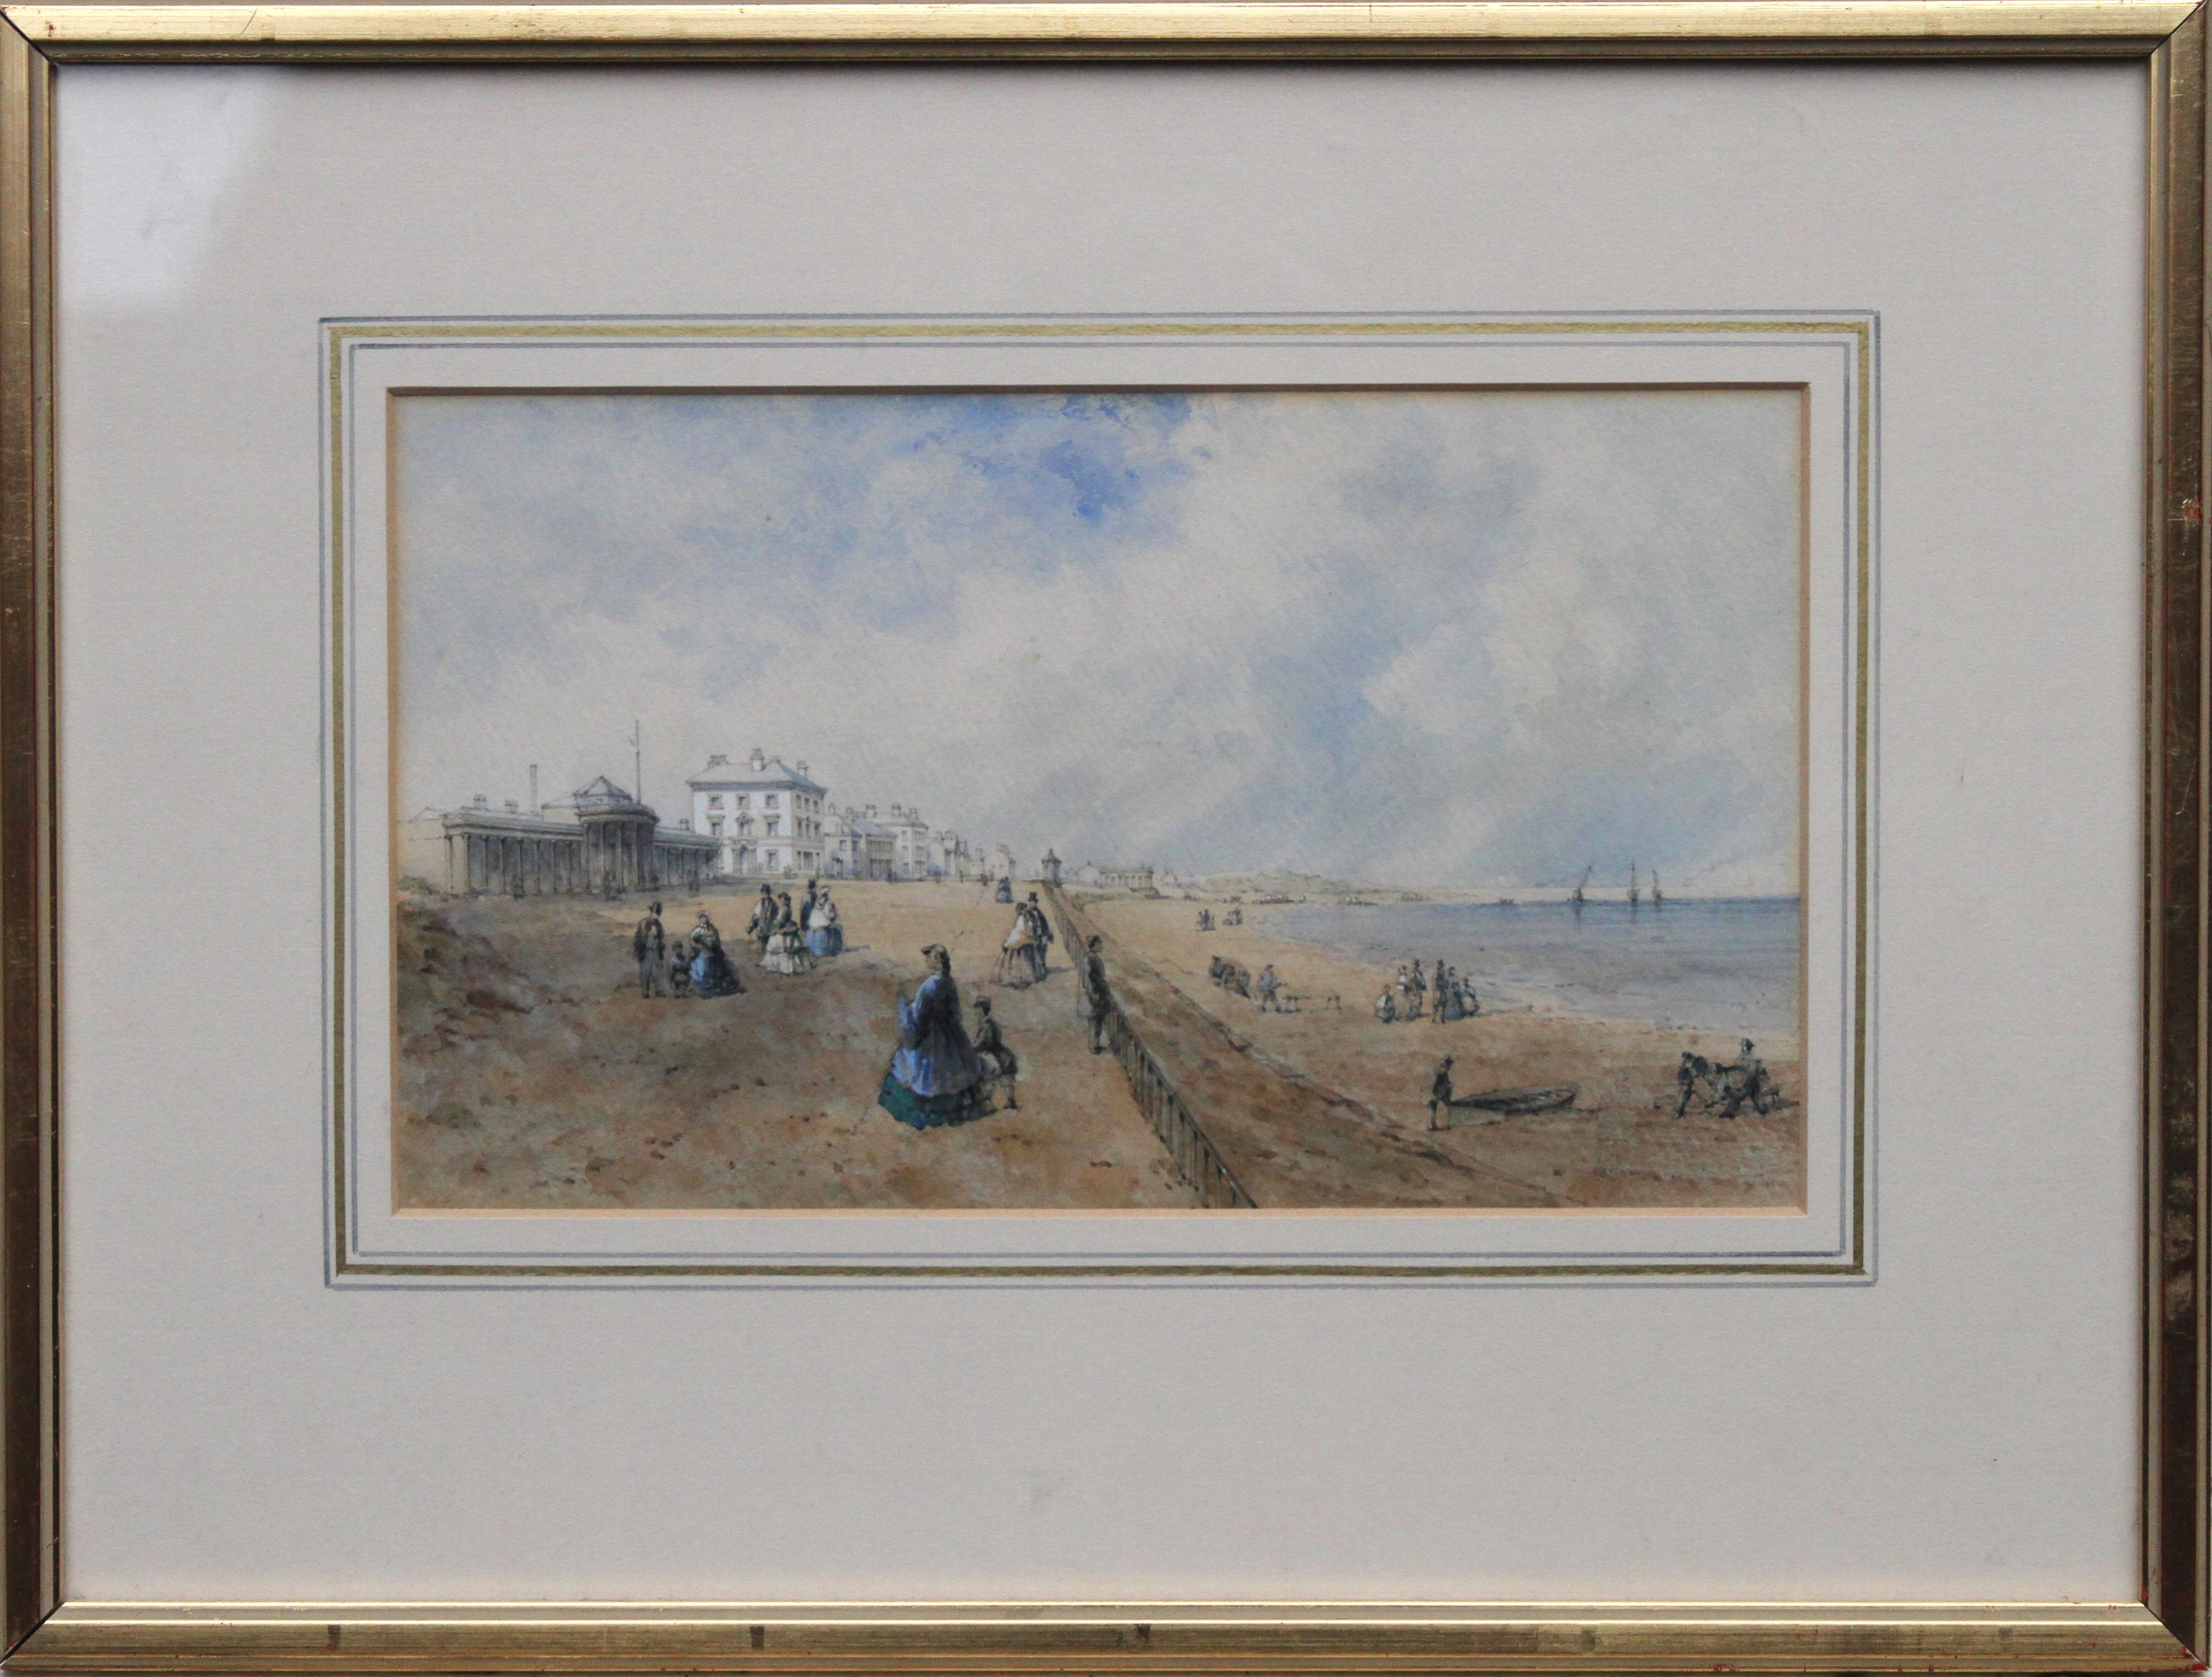 Promenade at Southport - British 19th century art coastal landscape watercolour